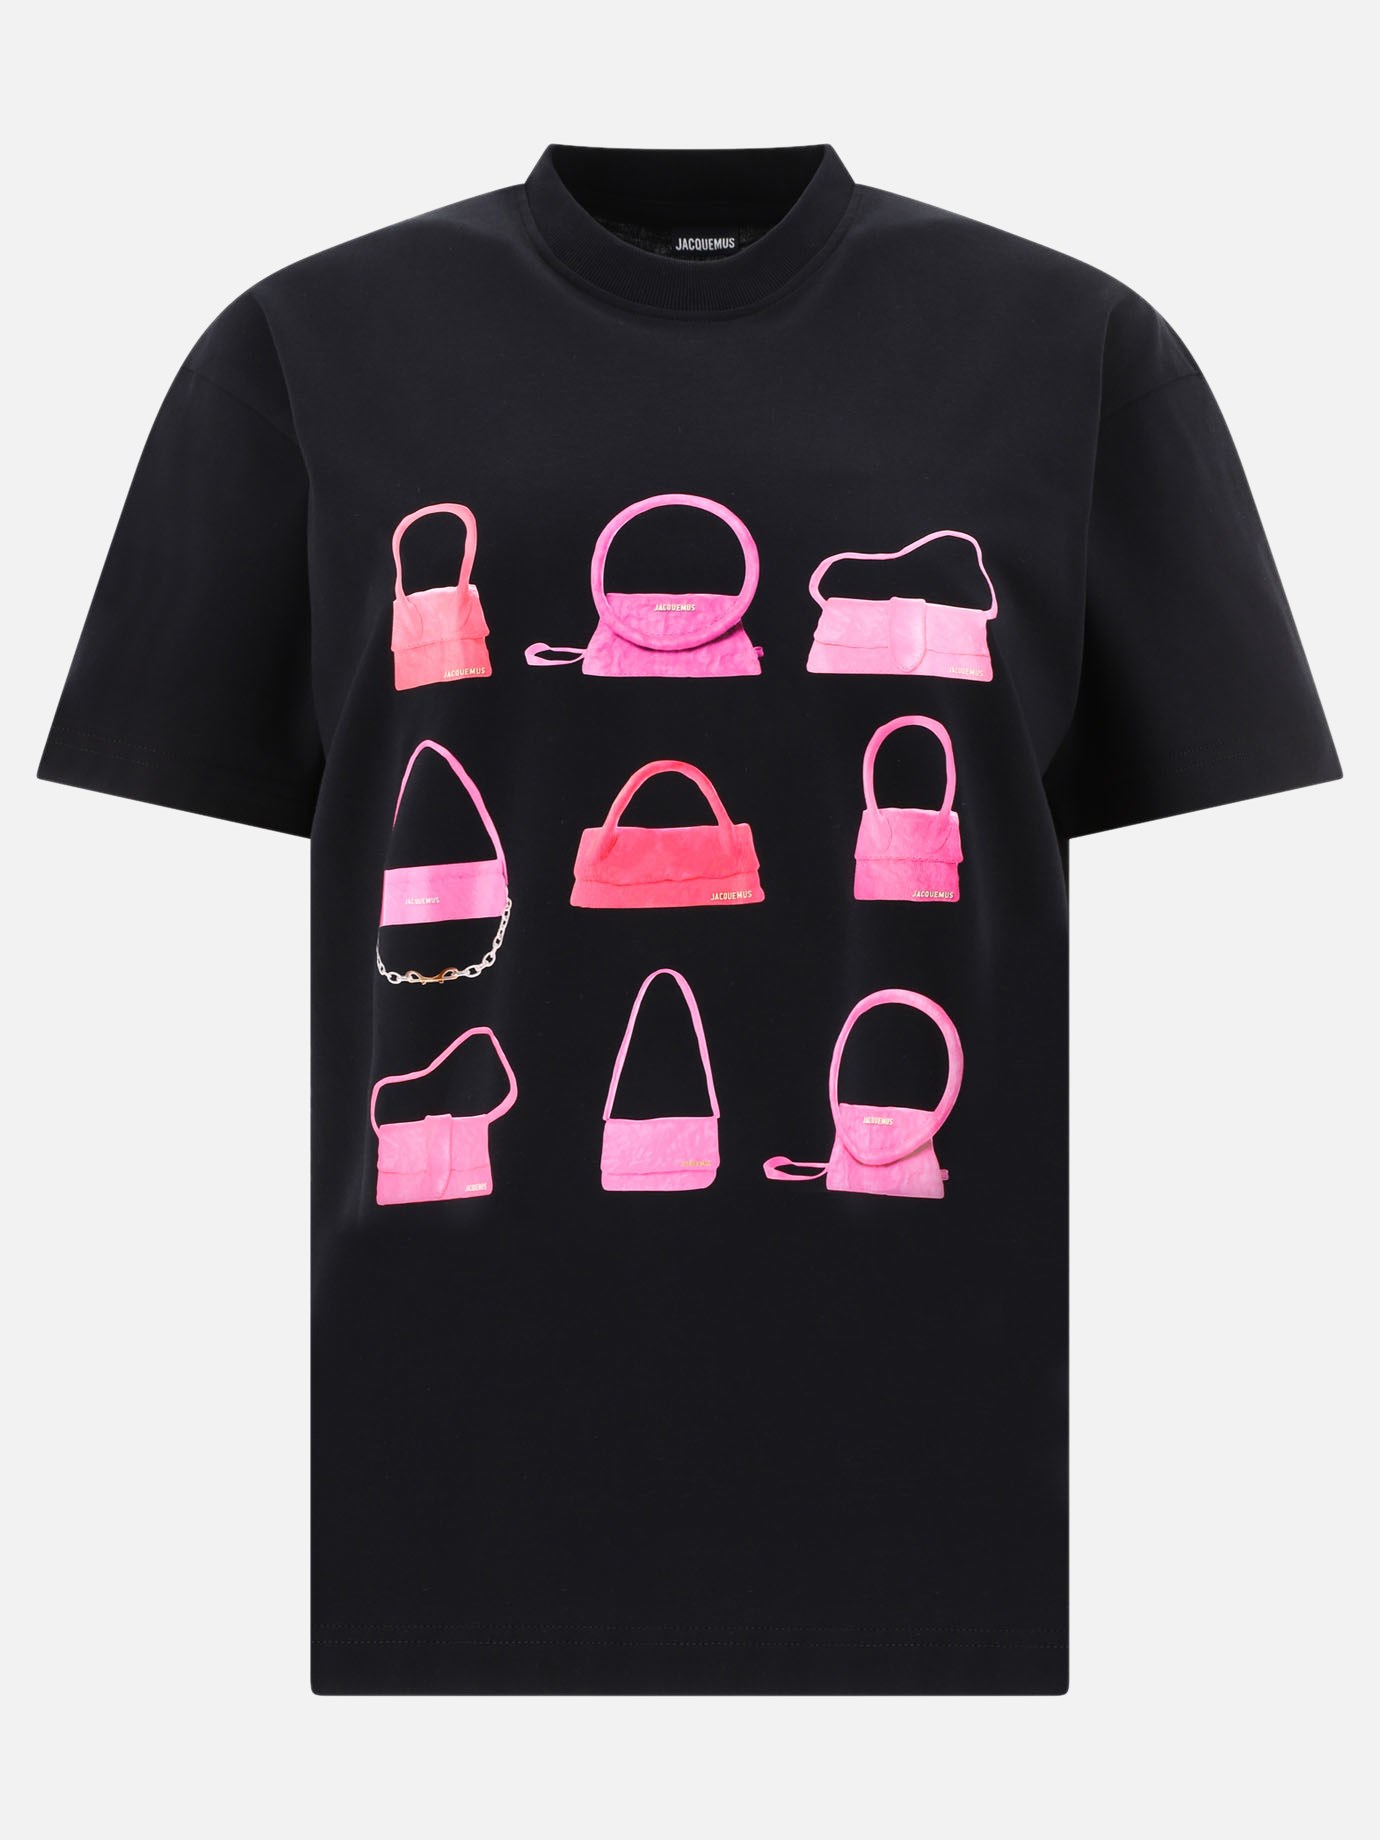  Le T-Shirt Sacs  t-shirtby Jacquemus - 1